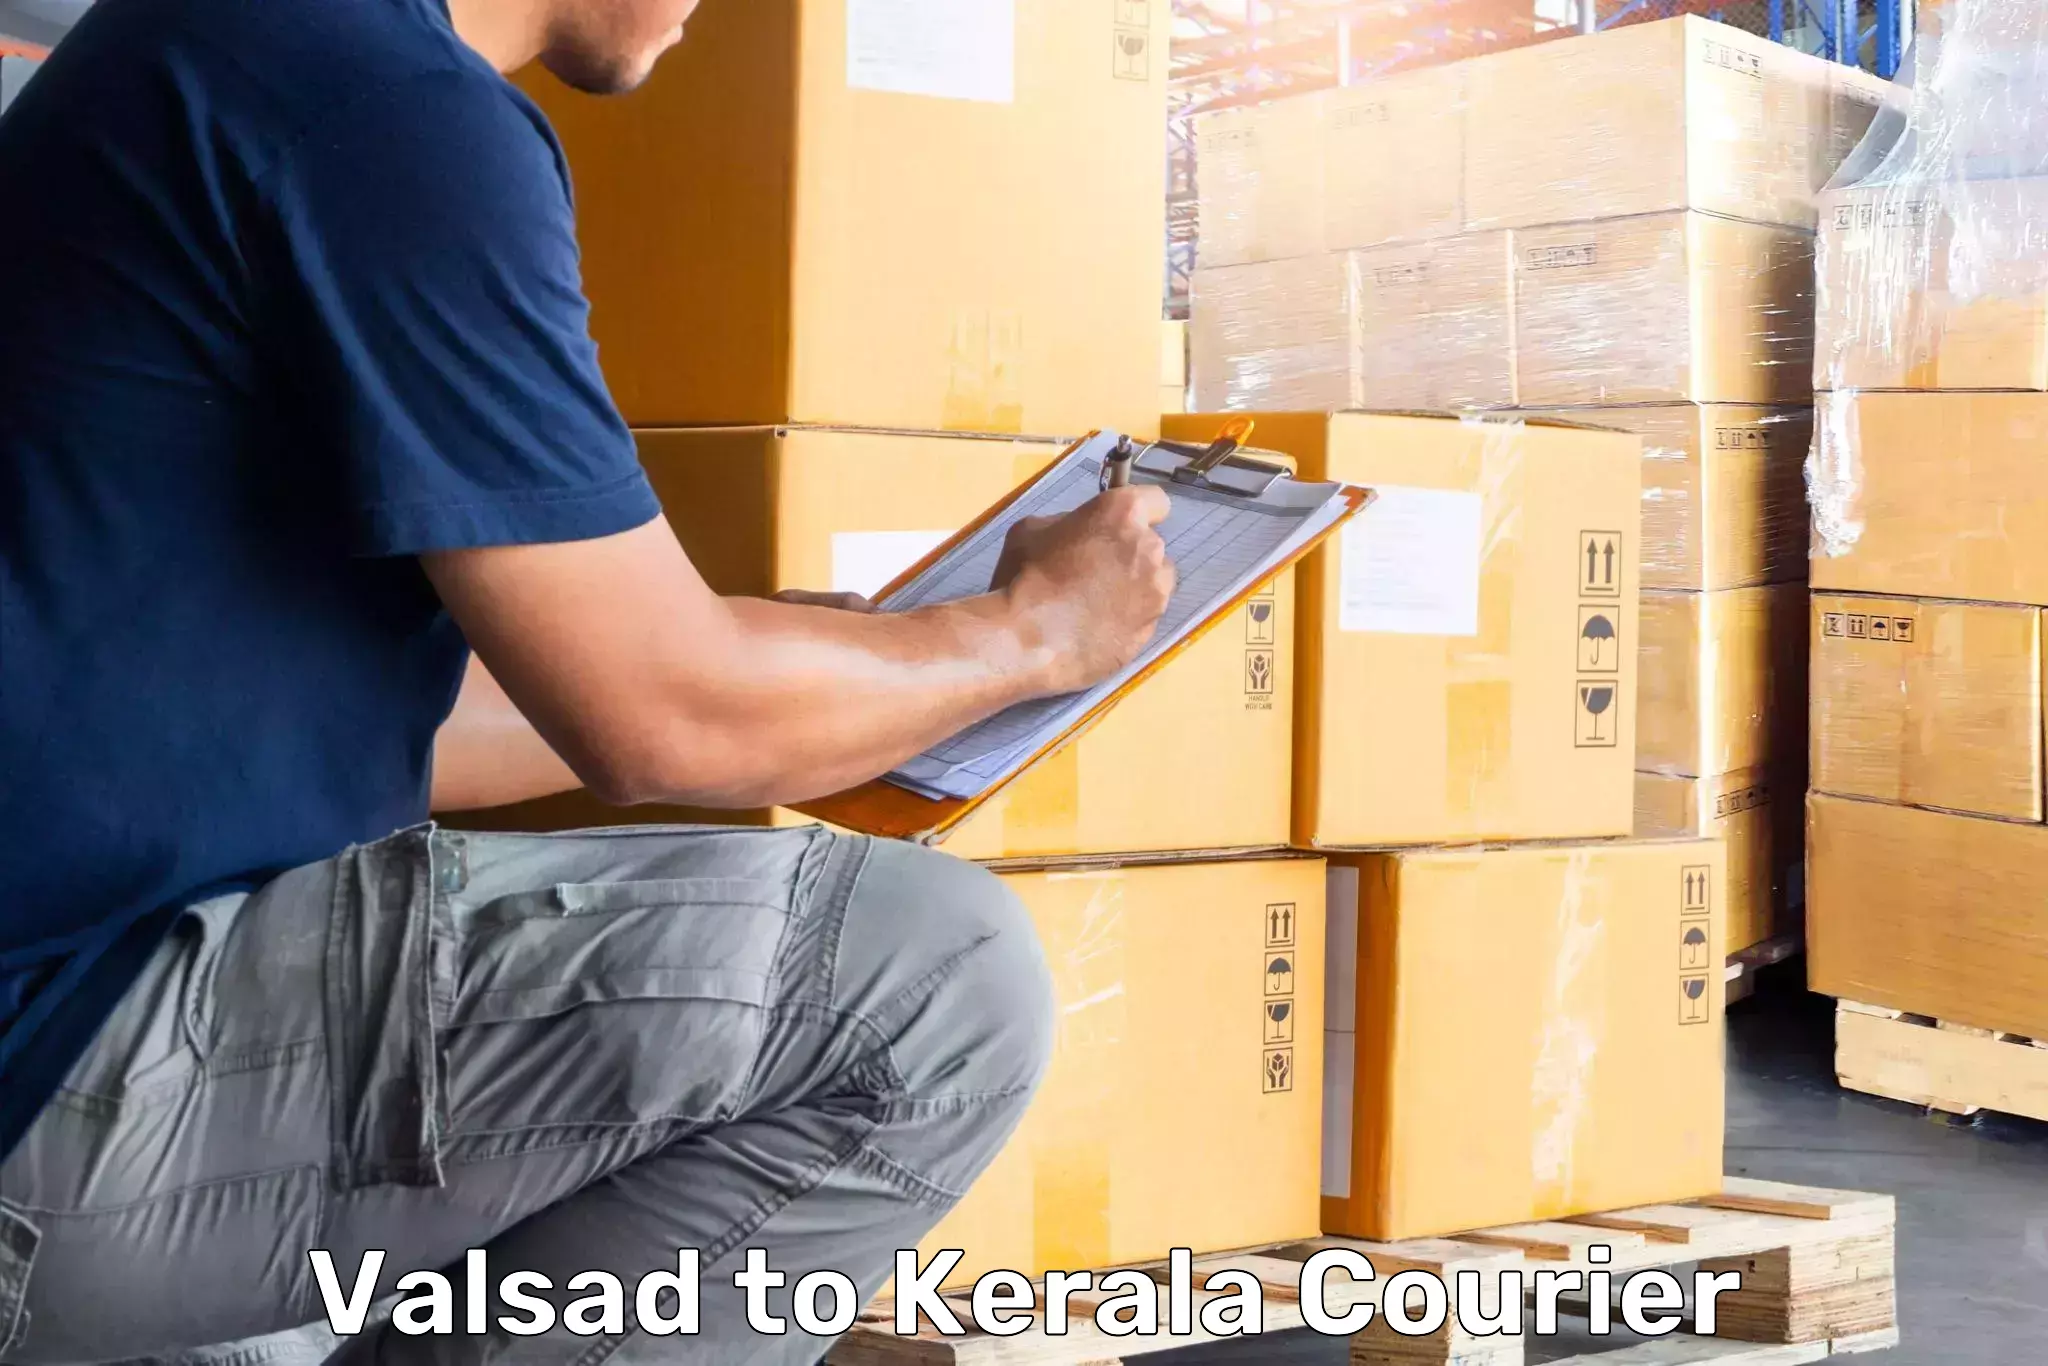 Doorstep luggage pickup in Valsad to Kerala